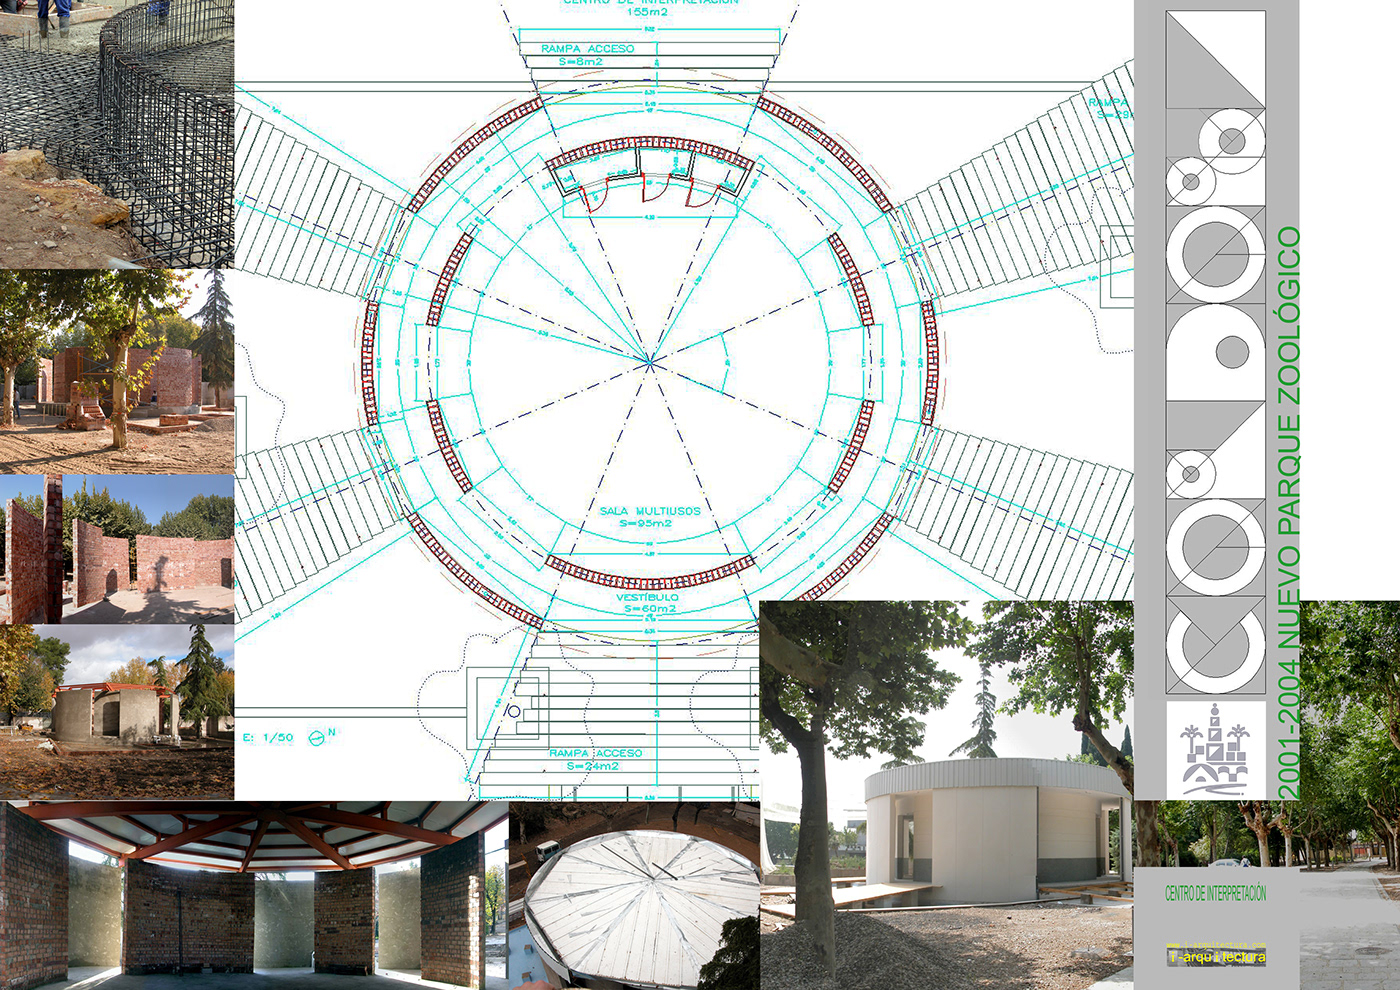 zoo cordoba DCV Urban project managment Site Architect works managment Landscape Sewerage Park